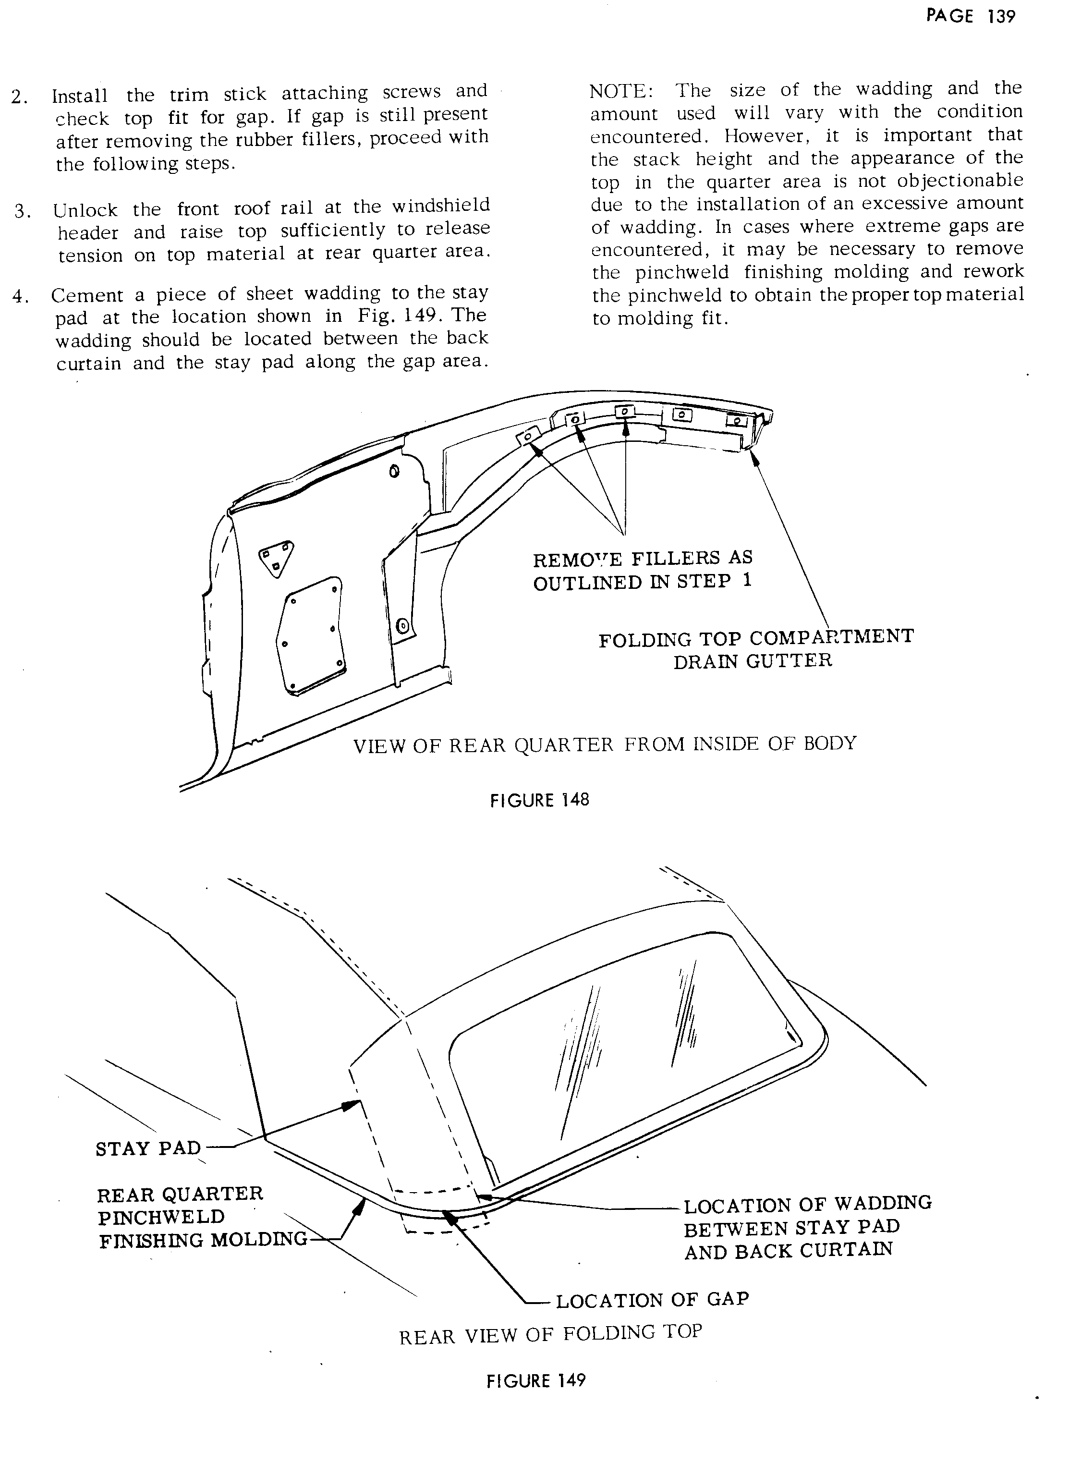 n_1957 Buick Product Service  Bulletins-140-140.jpg